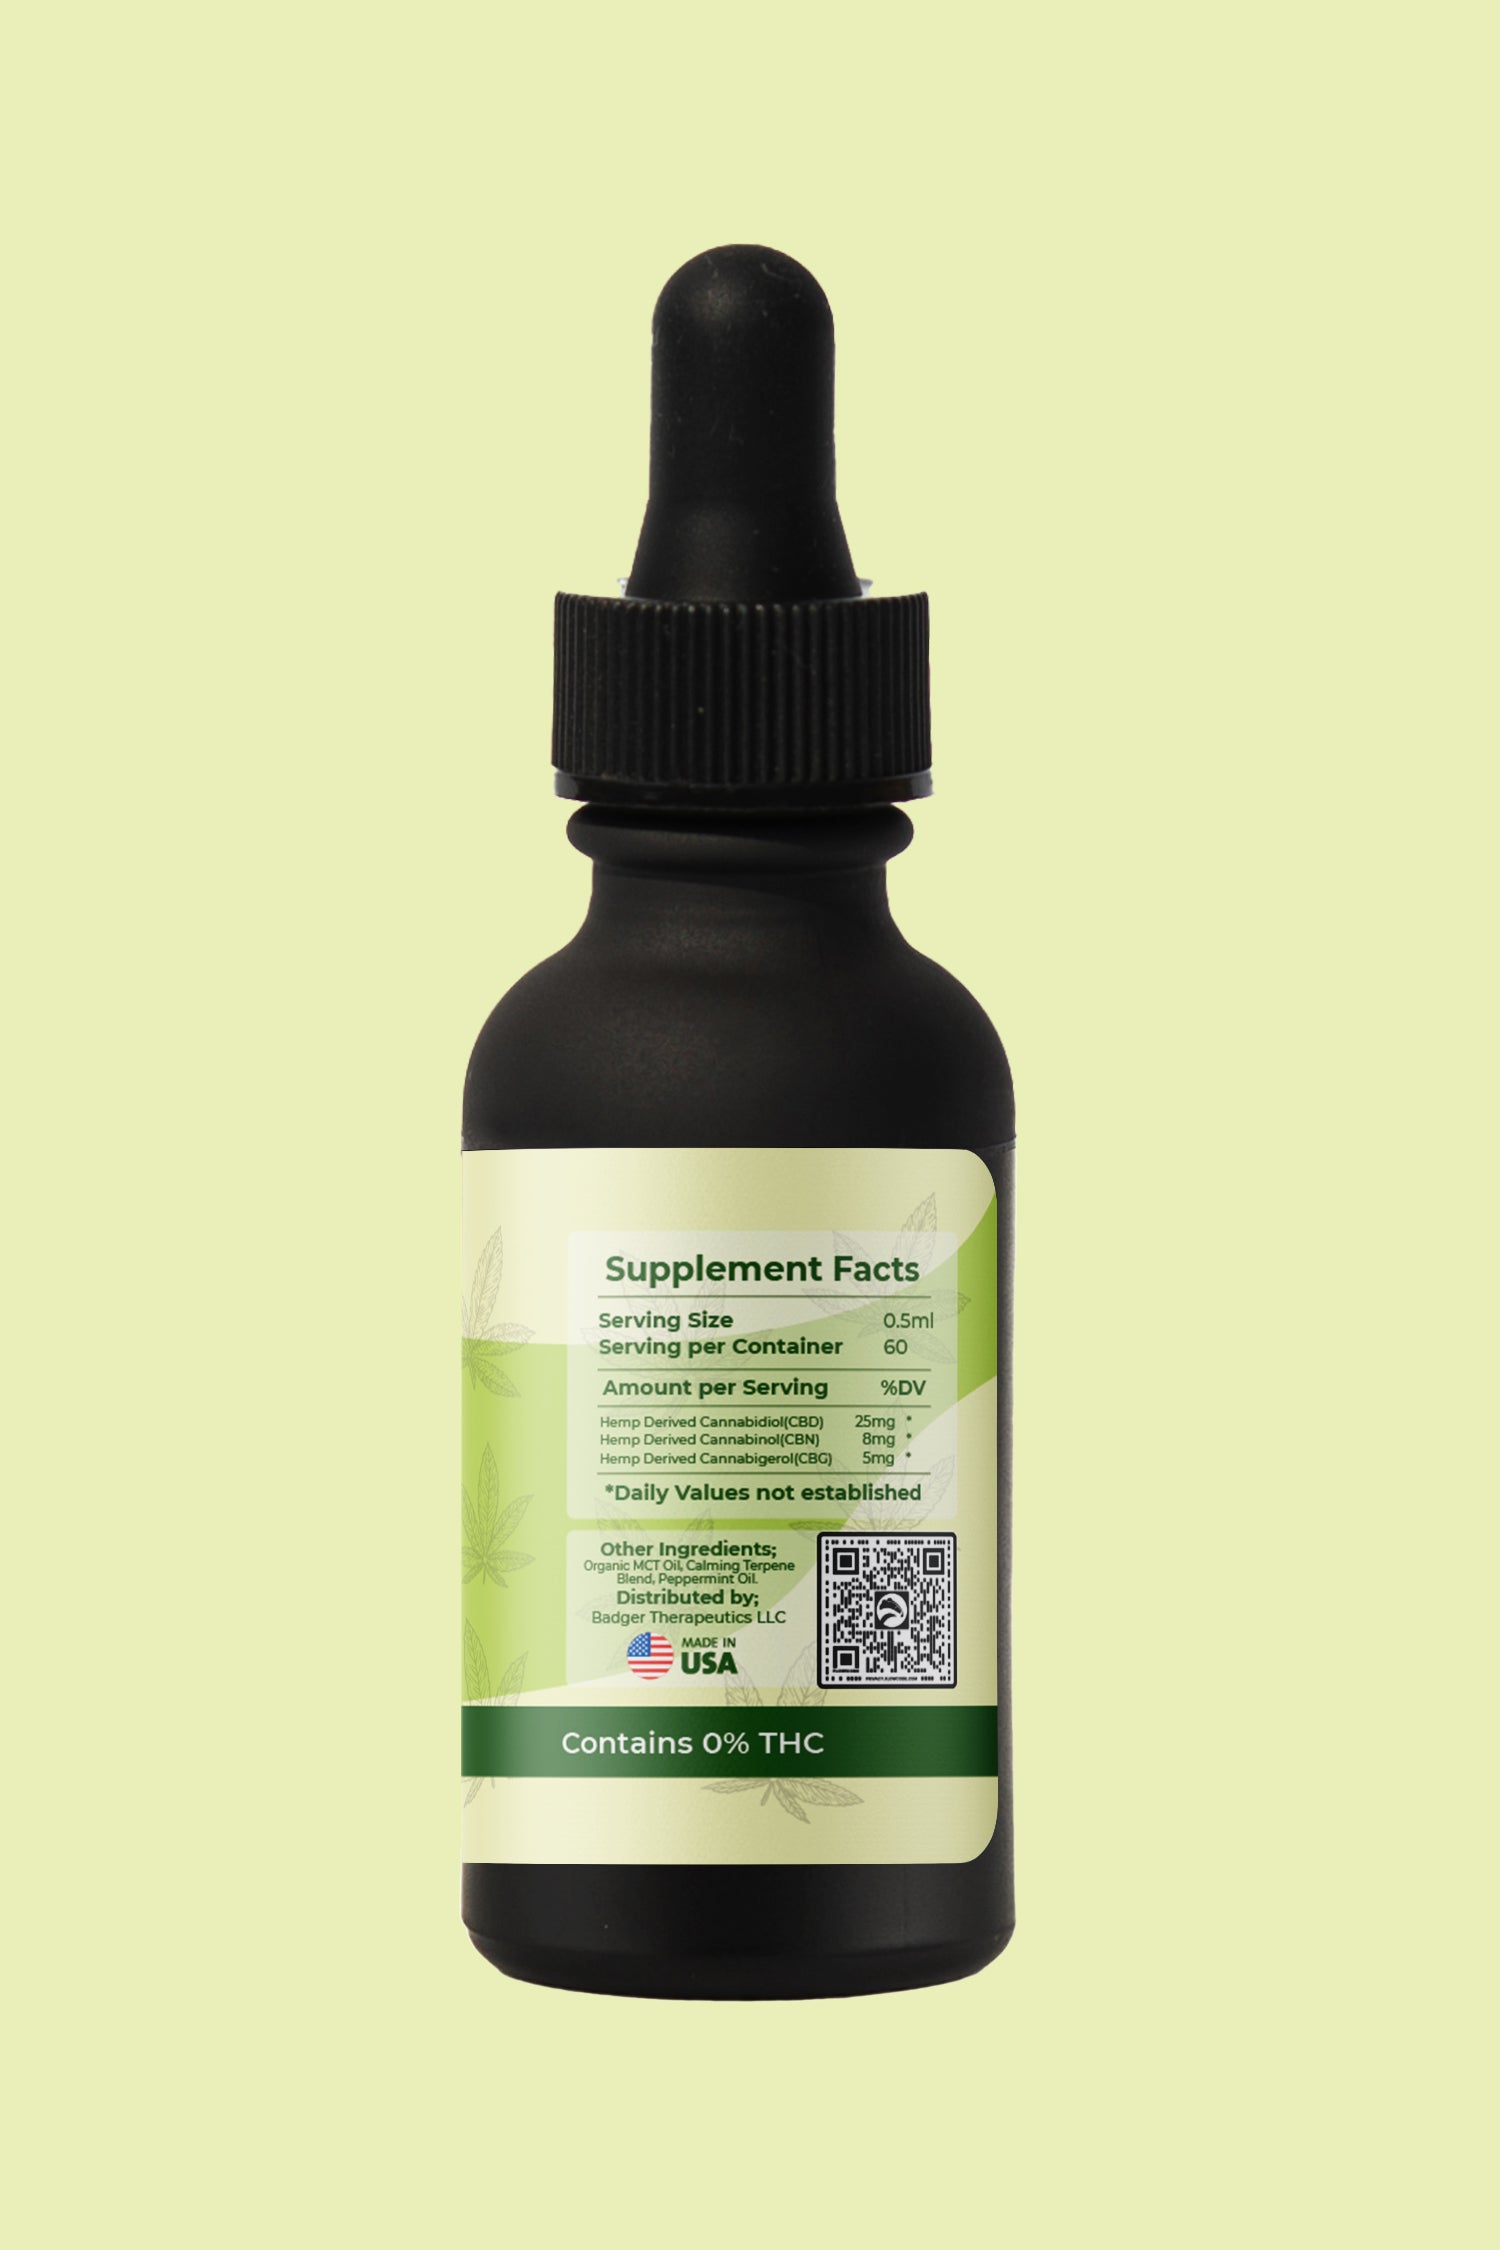 Badger Therapeutics PM Sleep Formula CBD Oil with 750mg CBD